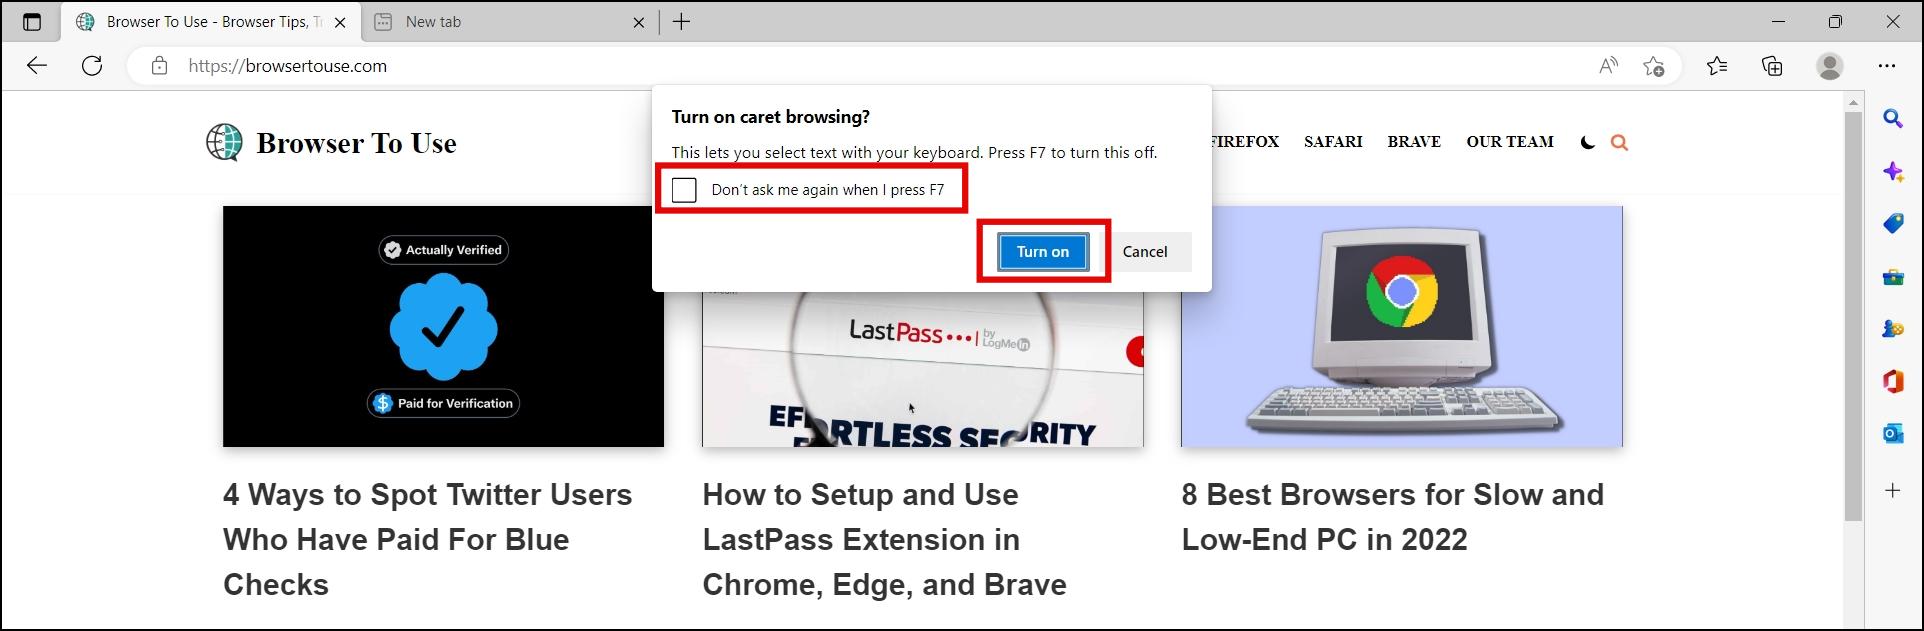 Caret Browsing Microsoft Edge Tips Tricks 